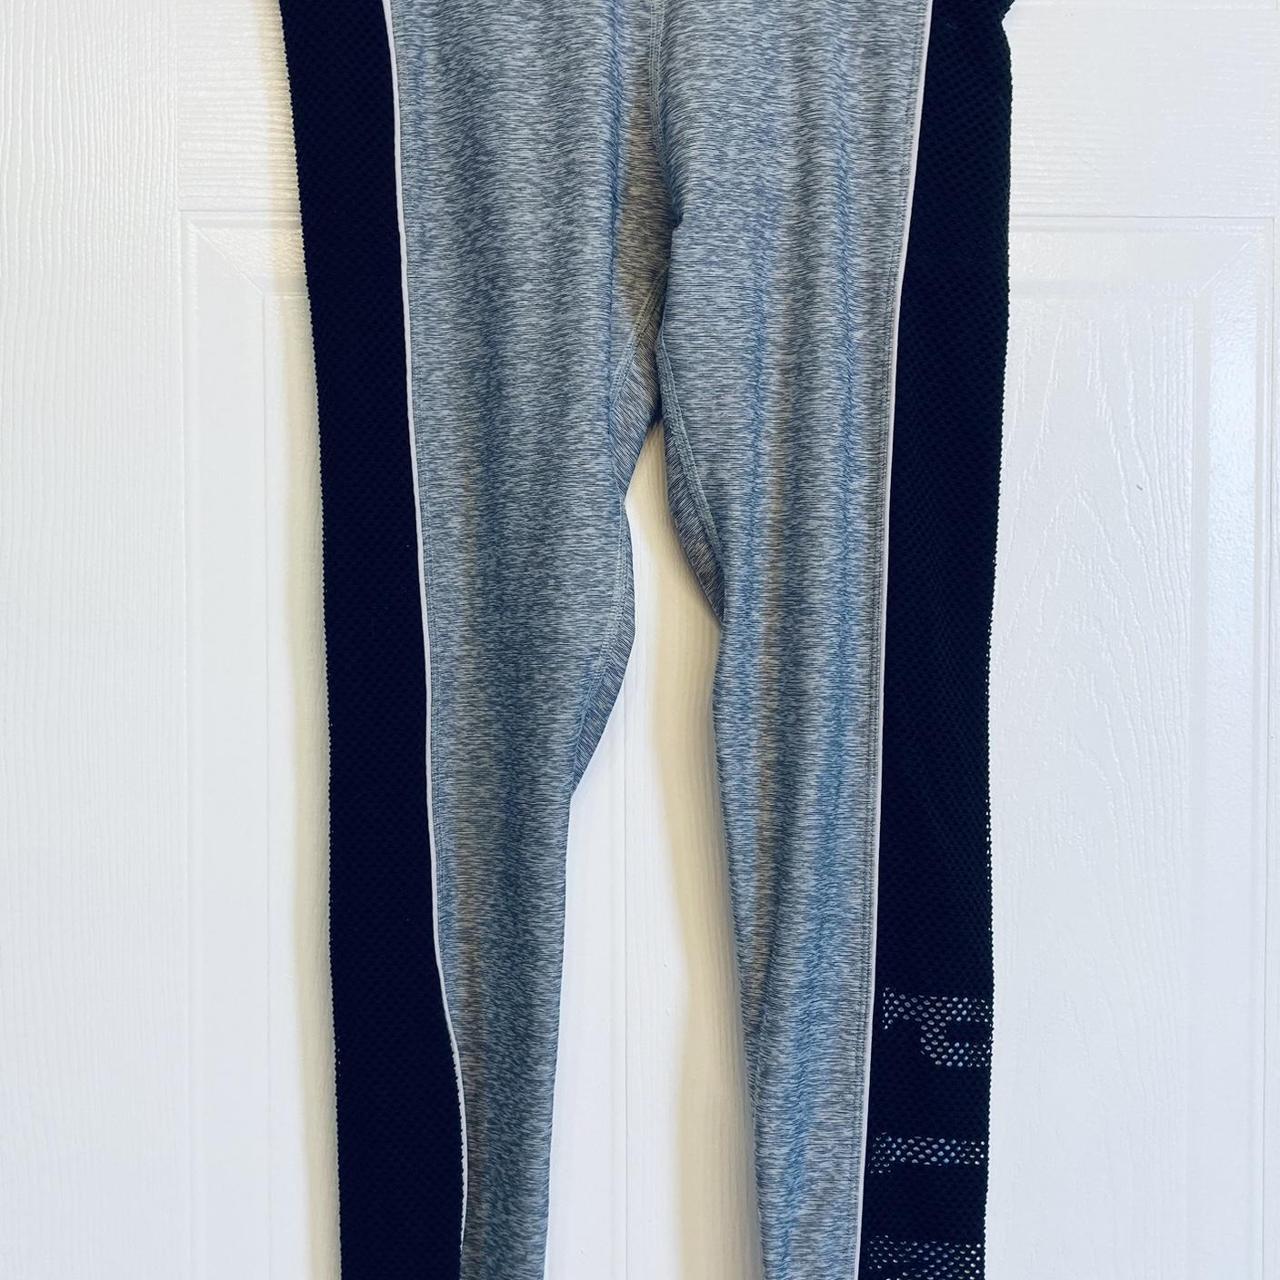 Grey Victoria's Secret leggings Long, fitted pant - Depop